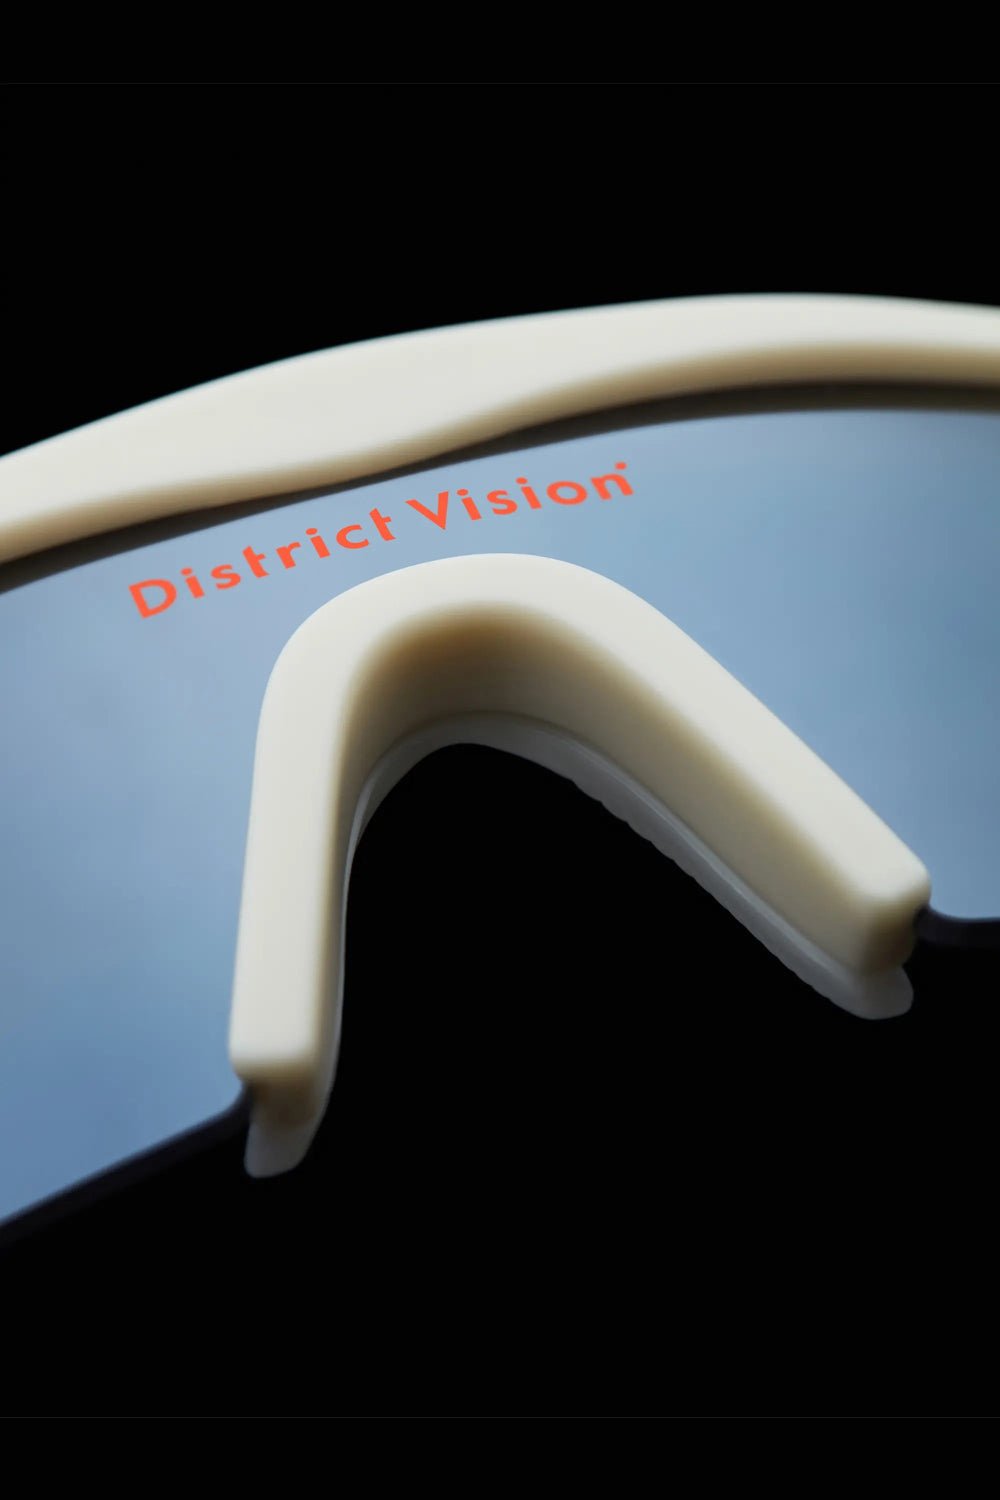 District Vision Koharu Eclipse Sunglasses - Limestone/D+ Onyx Mirror | Coffee Outdoors